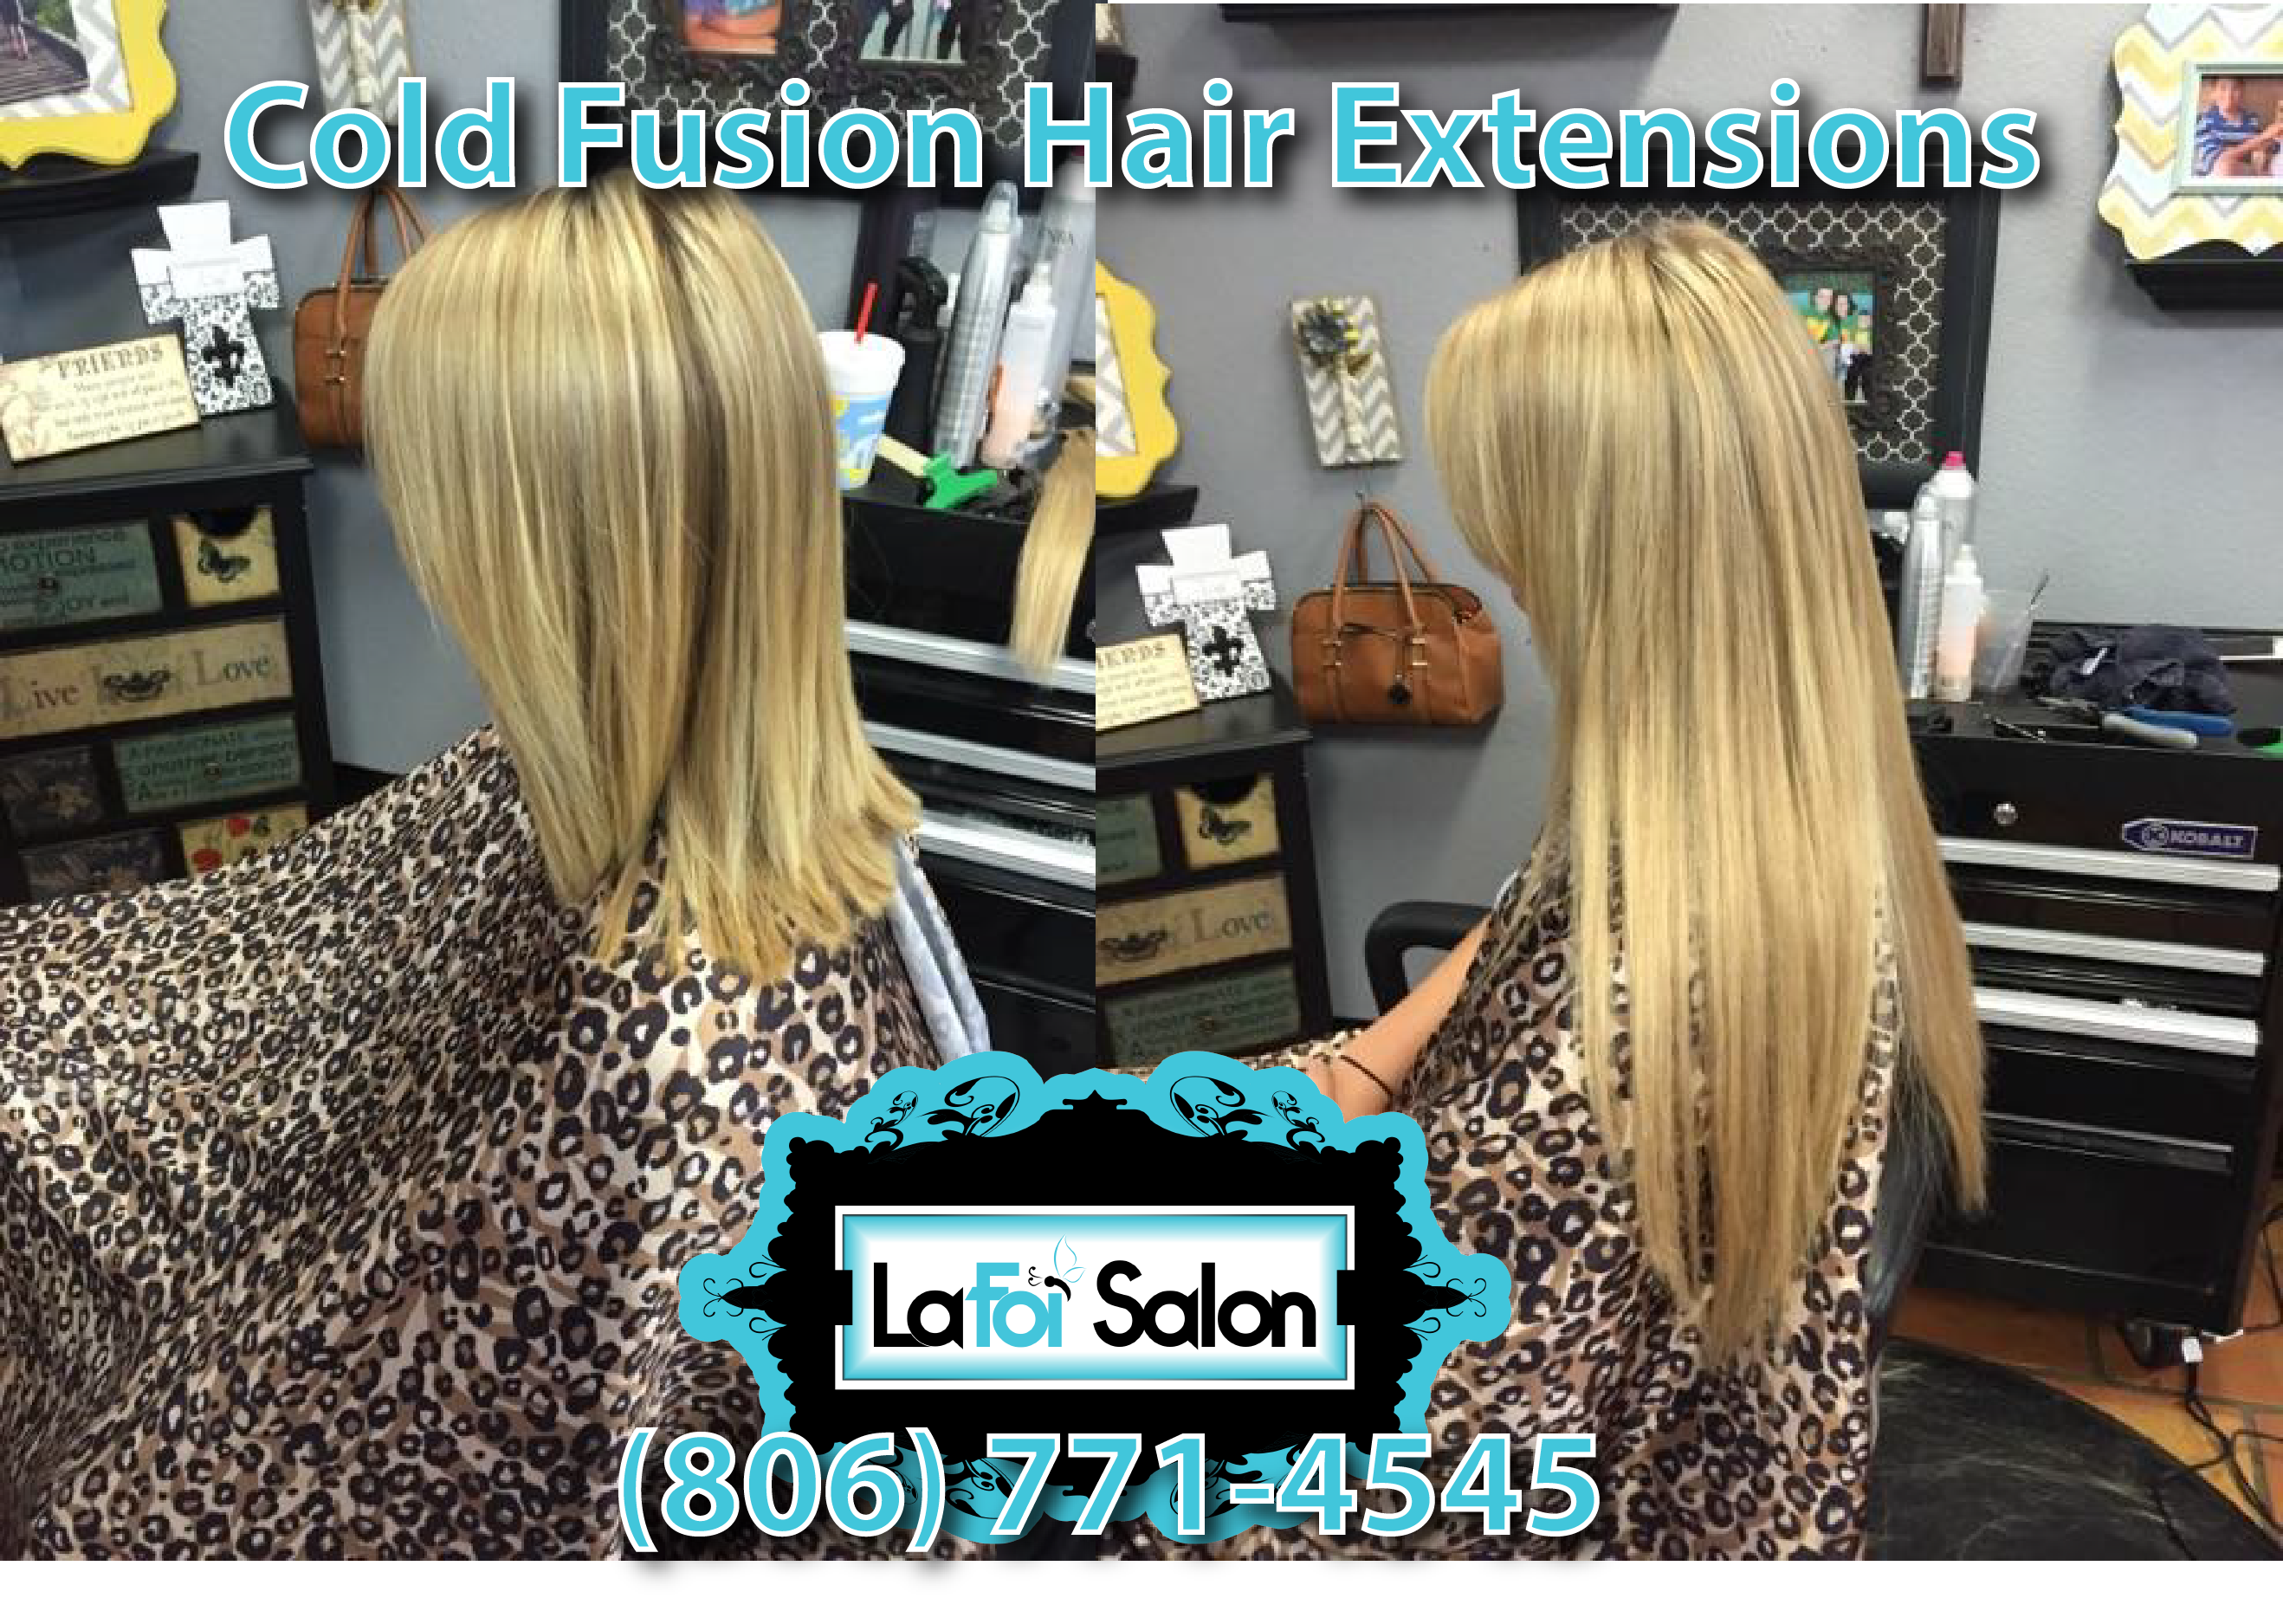 Check out these Beautiful Blonde Extensions!!! www.lafoisalon.com  lafoisalon  hairsalonslubbock  hairextensionslubbock